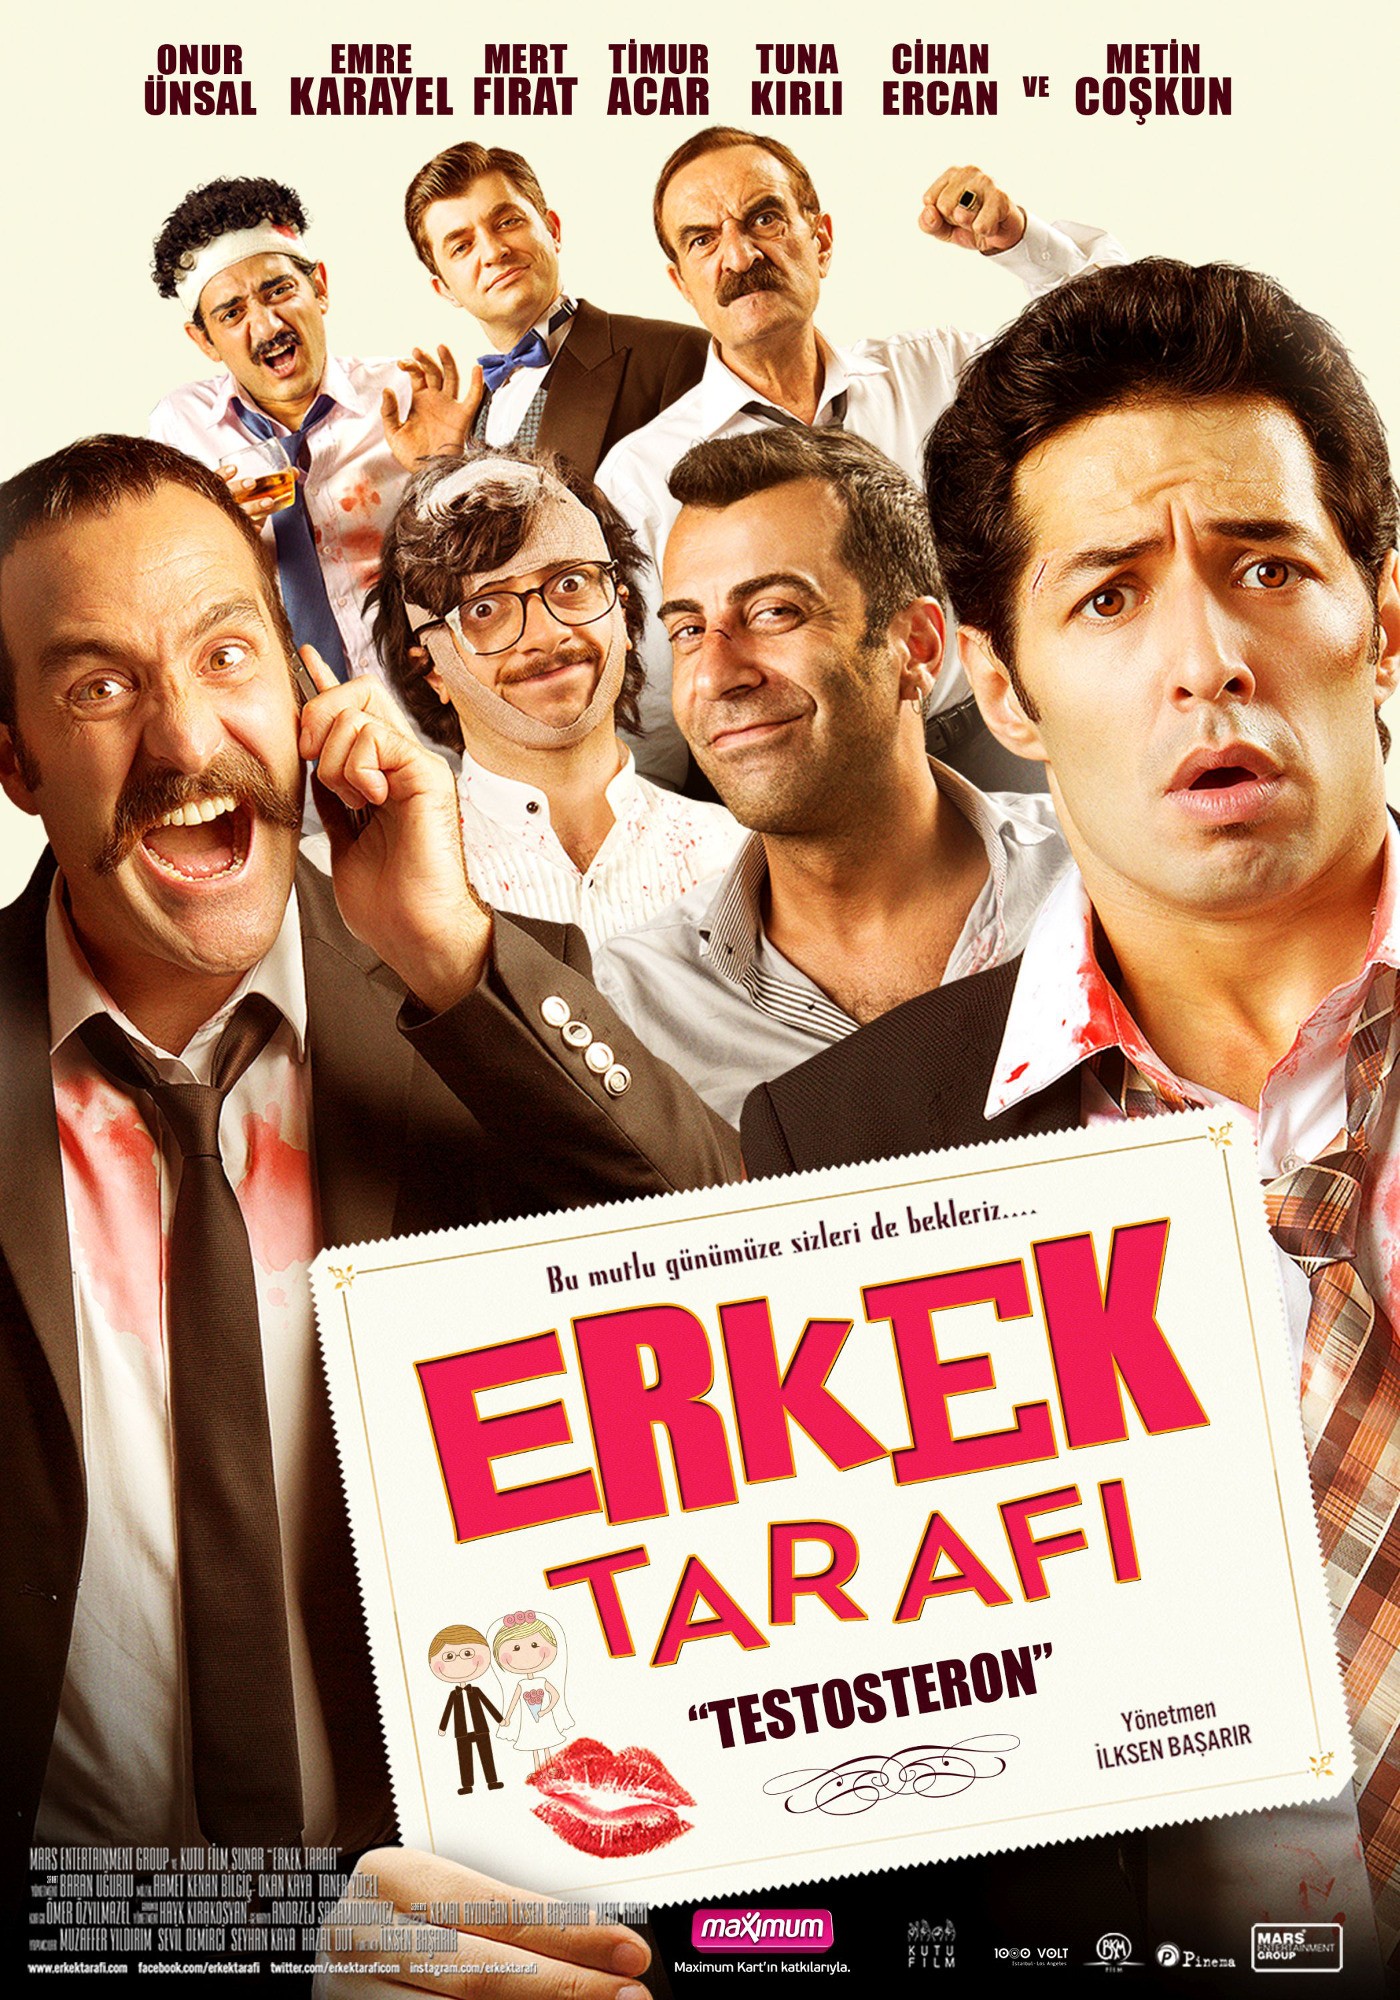 Mega Sized Movie Poster Image for Erkek tarafi testosteron 